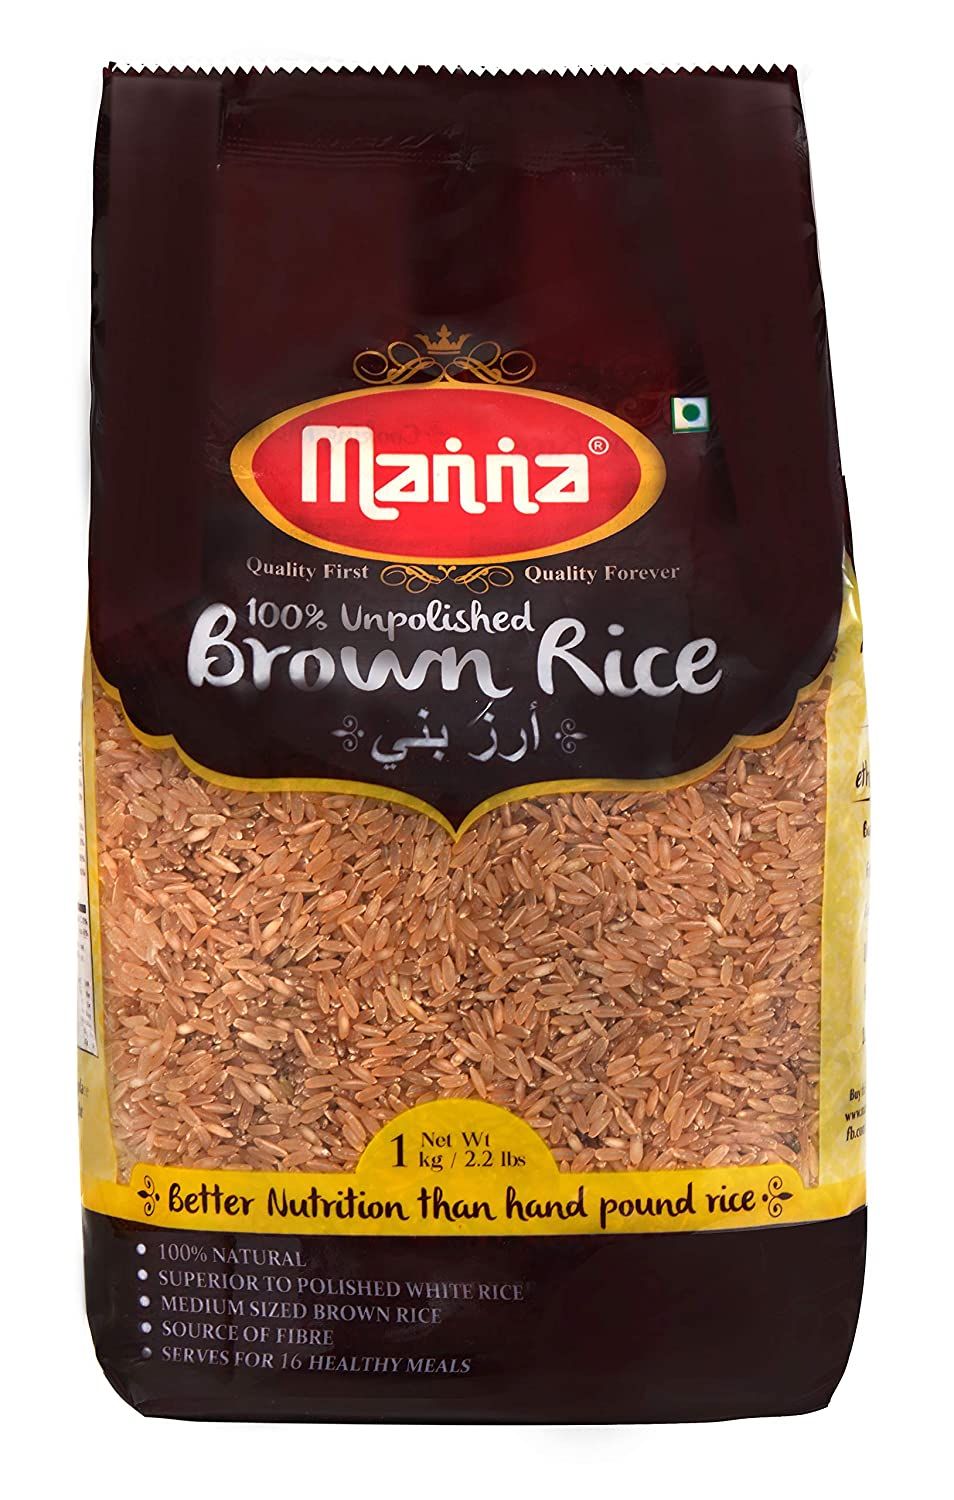 Manna Brown Rice Image